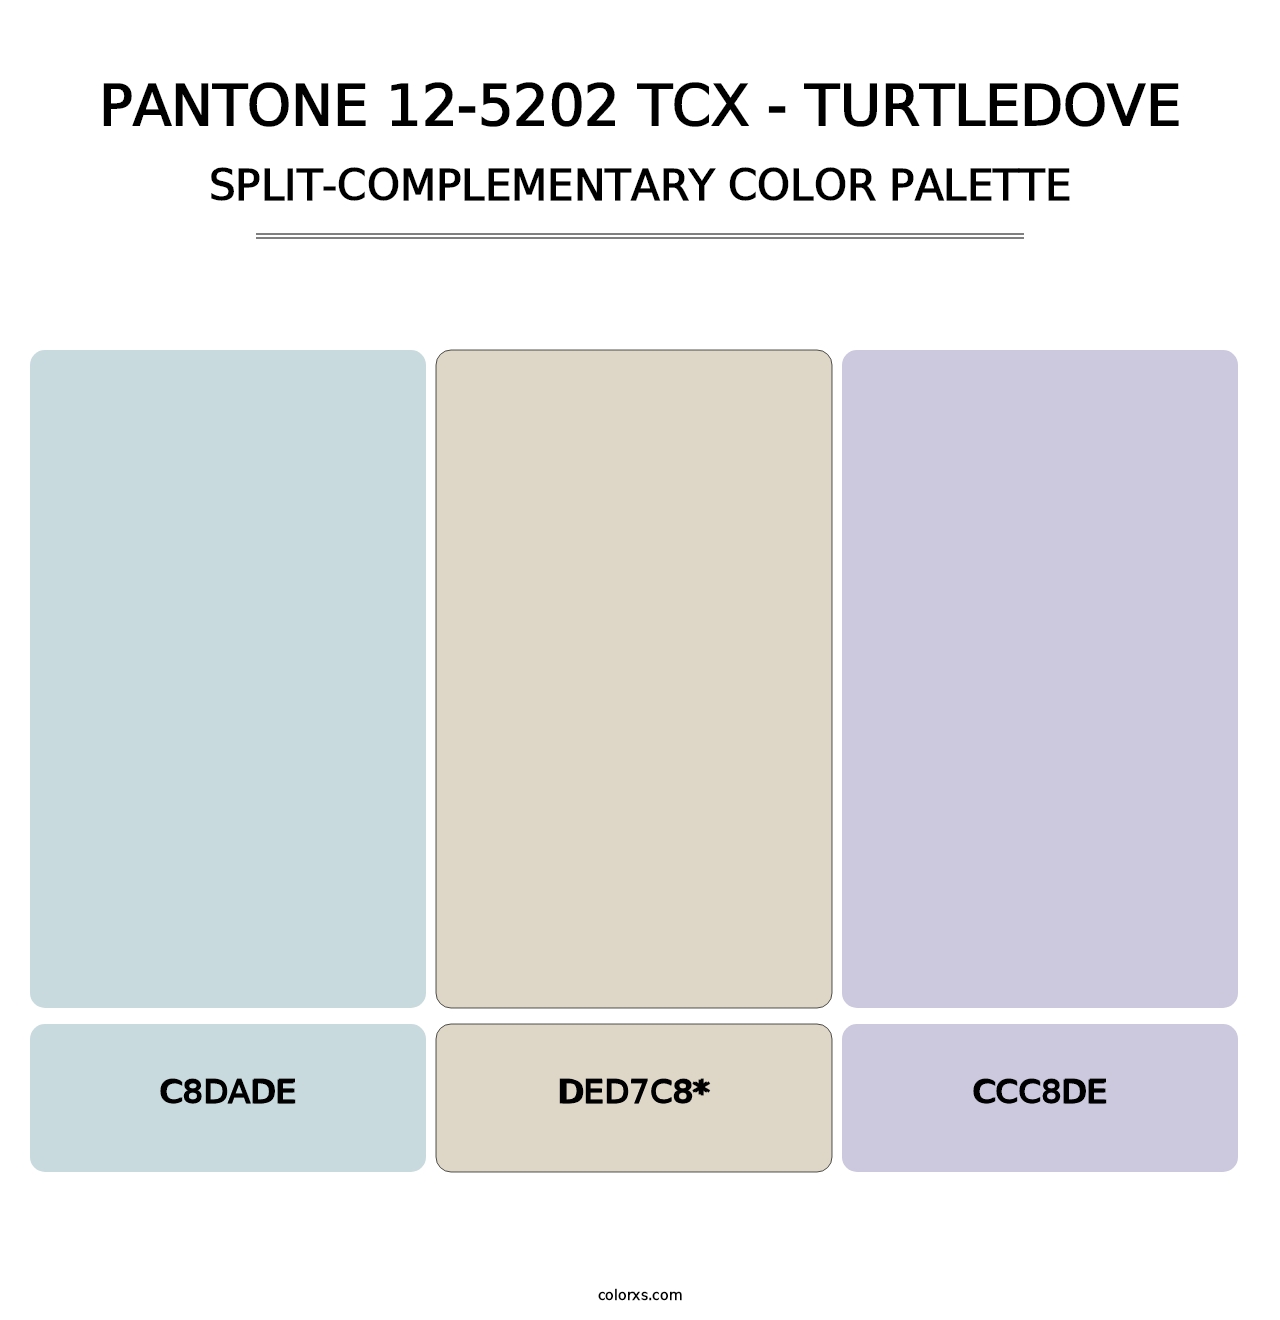 PANTONE 12-5202 TCX - Turtledove - Split-Complementary Color Palette